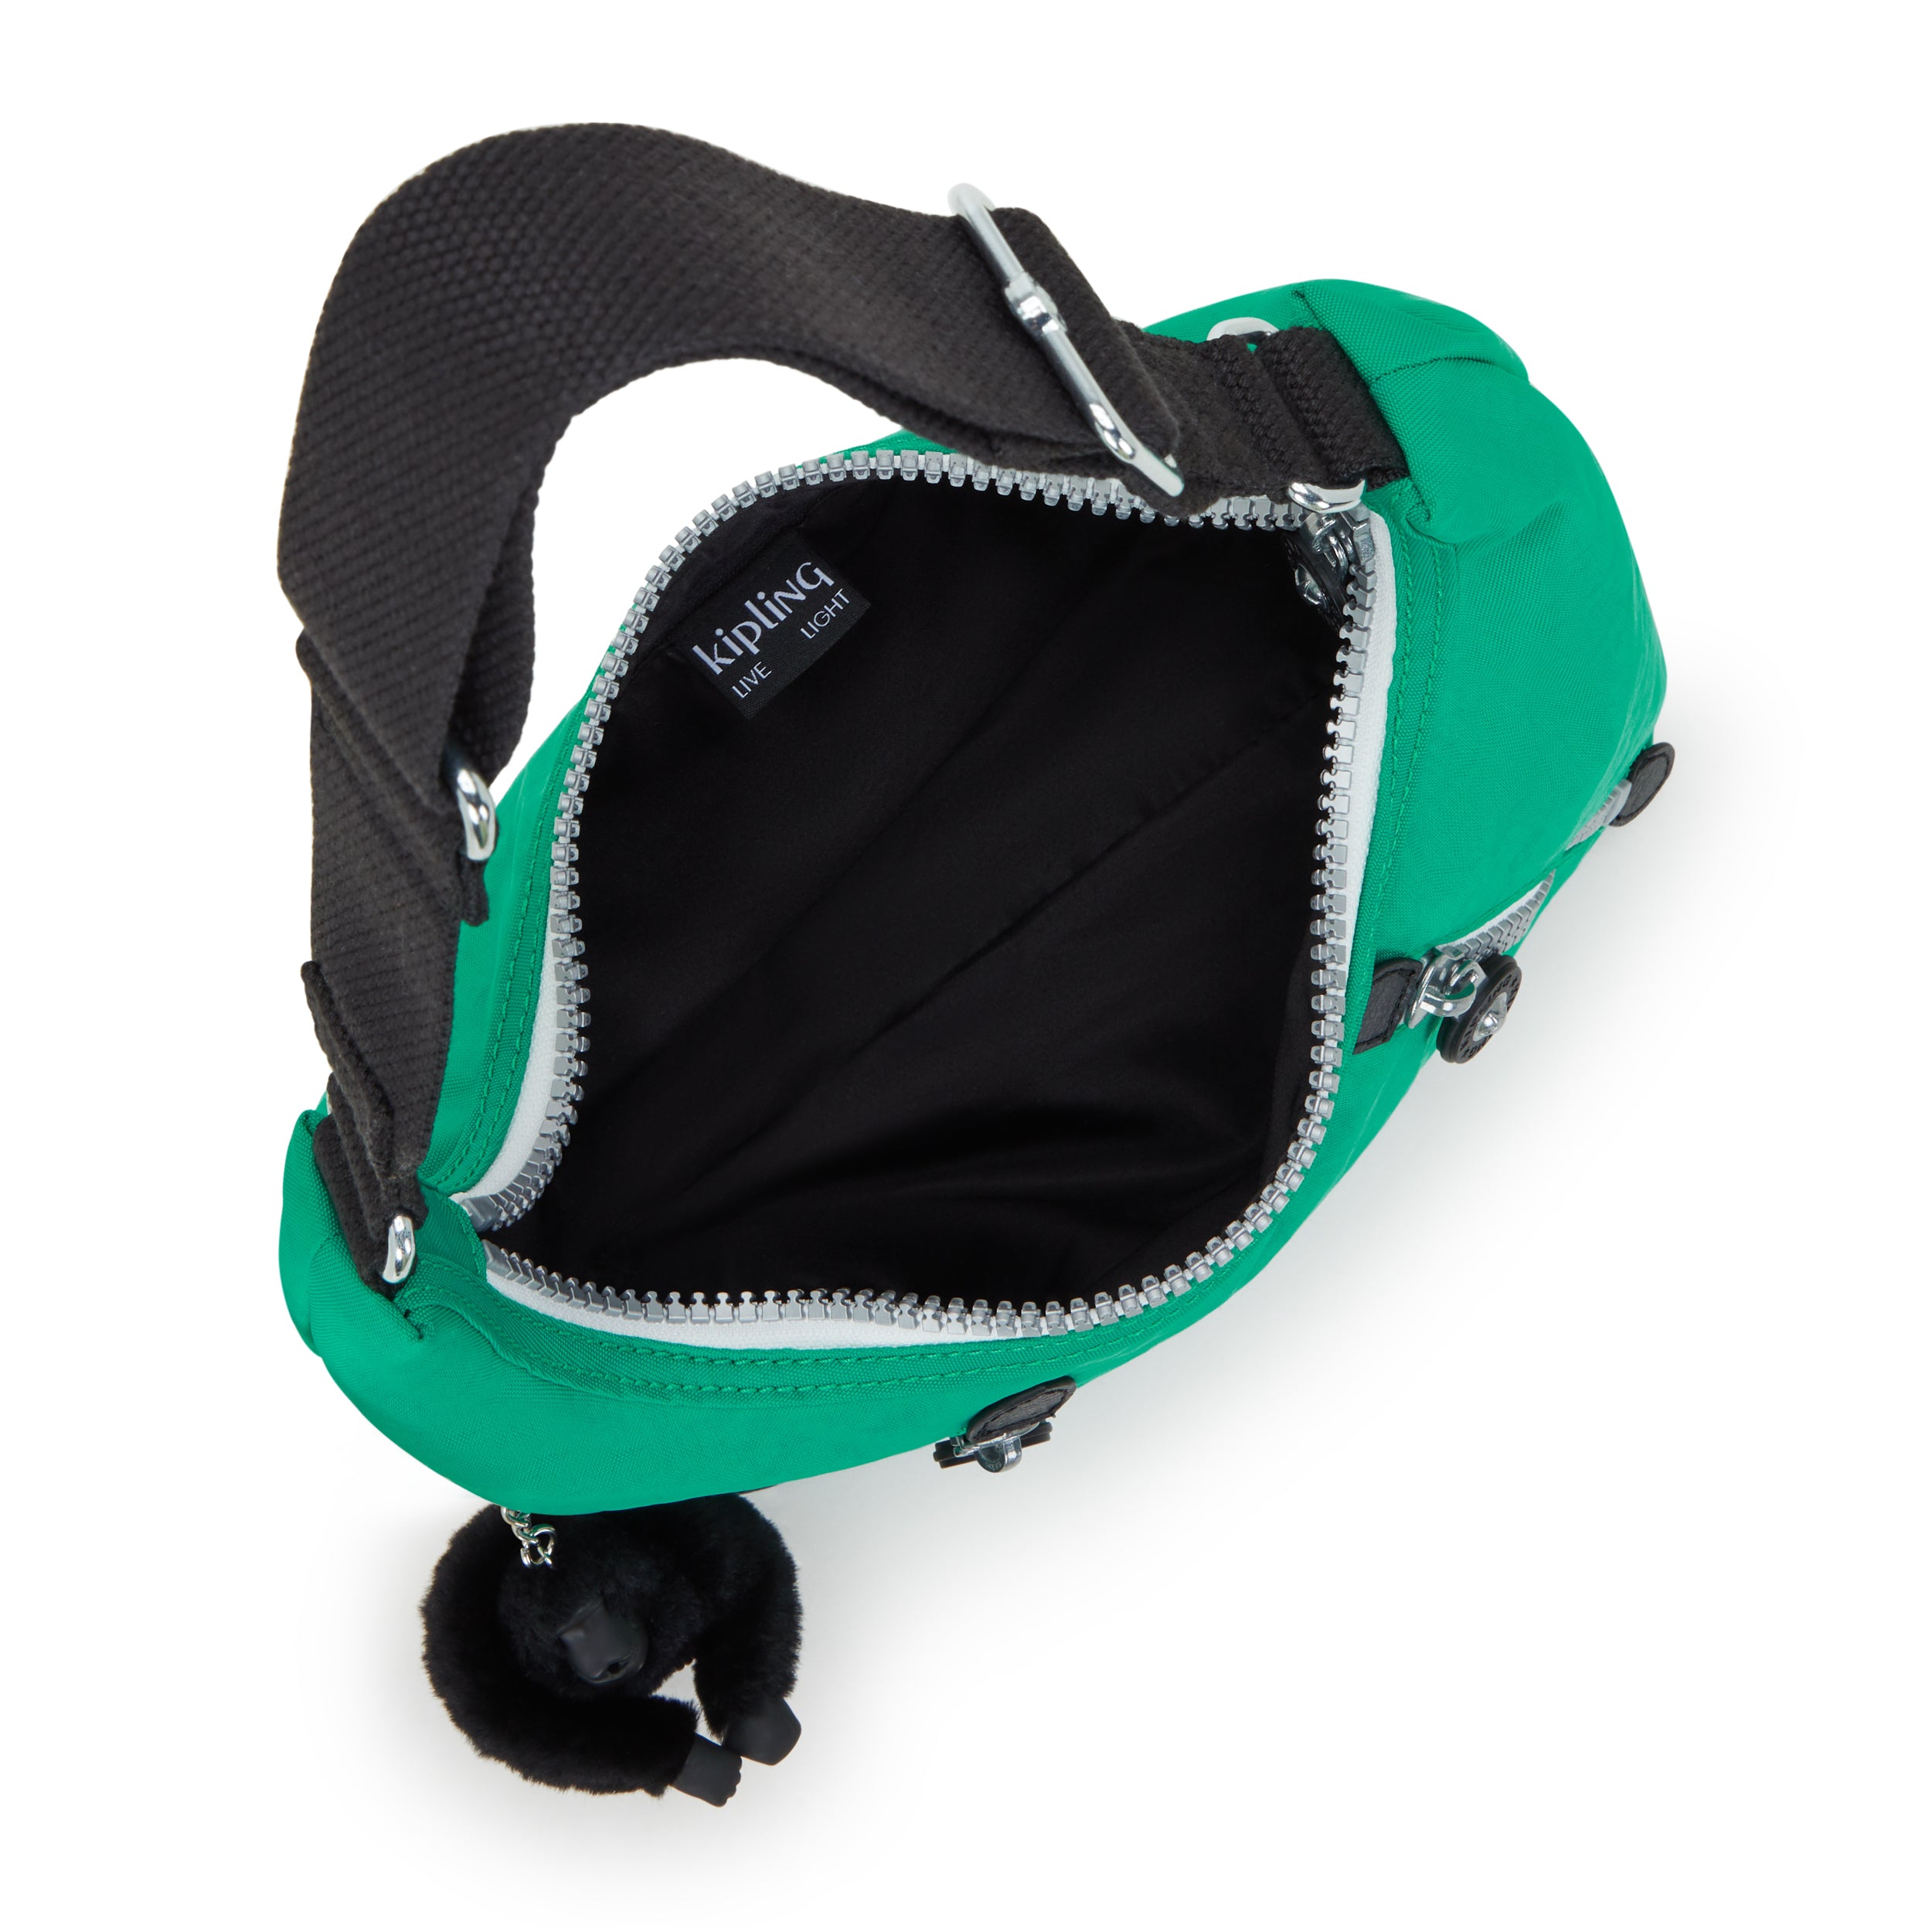 KIPLING-Nikki-Small shoulderbag-Rapid Green-I4216-AG4